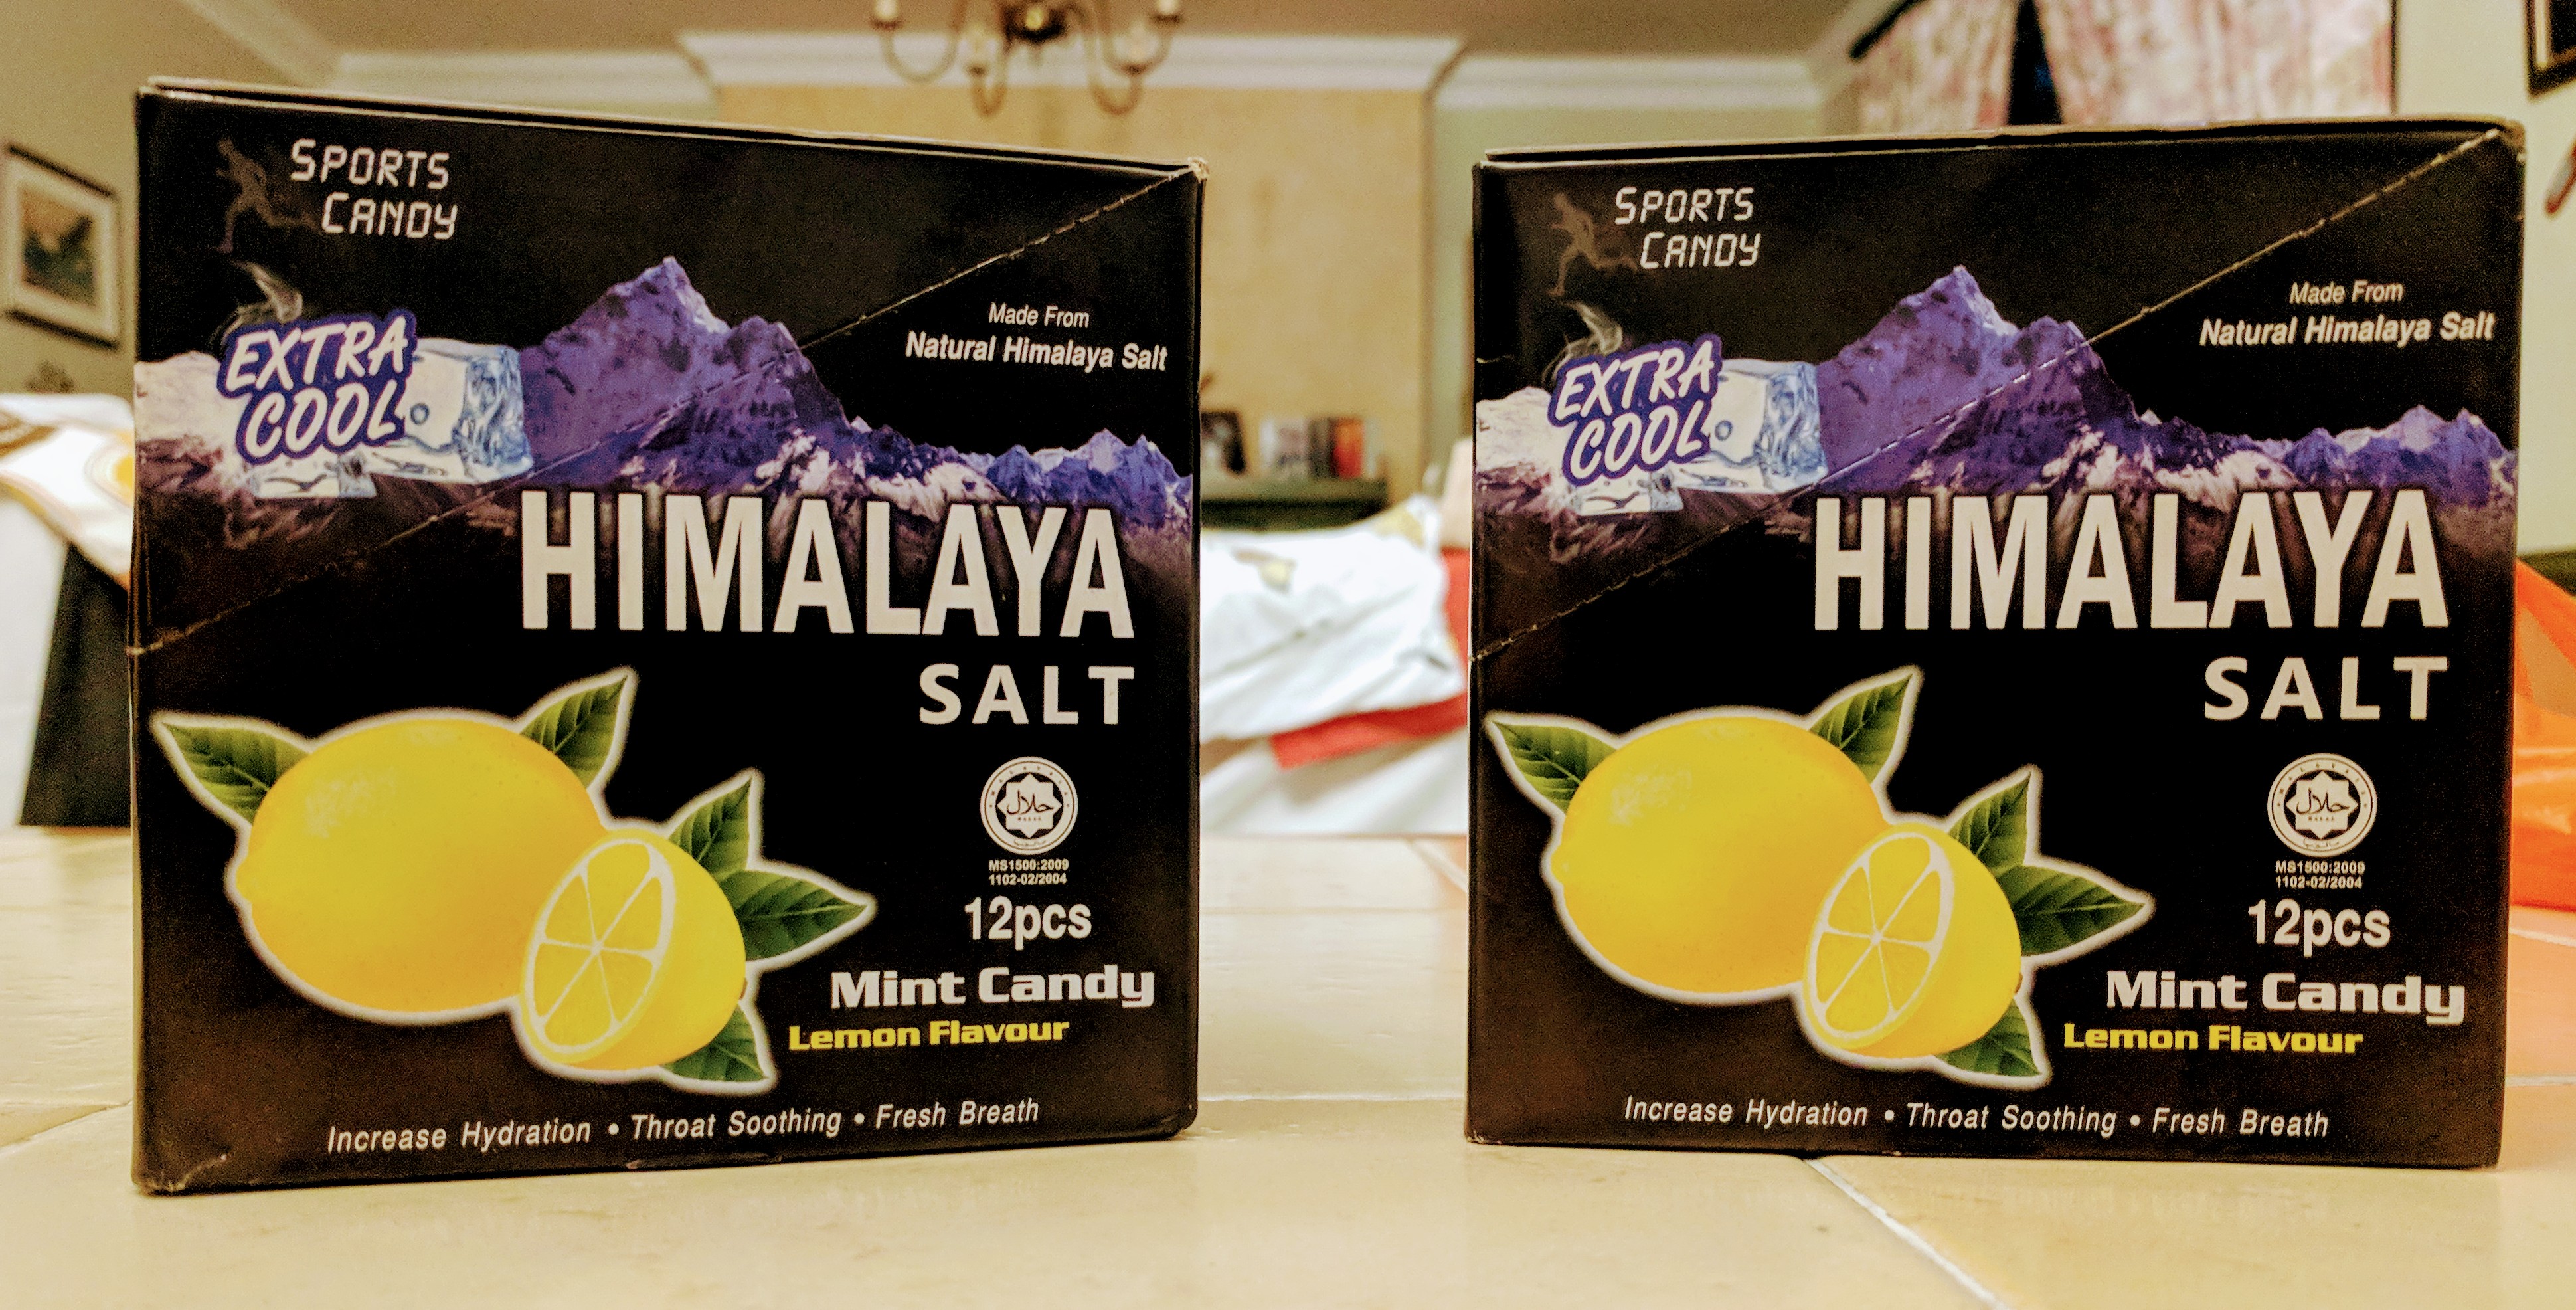 Himalaya Salt candy is so addictive!